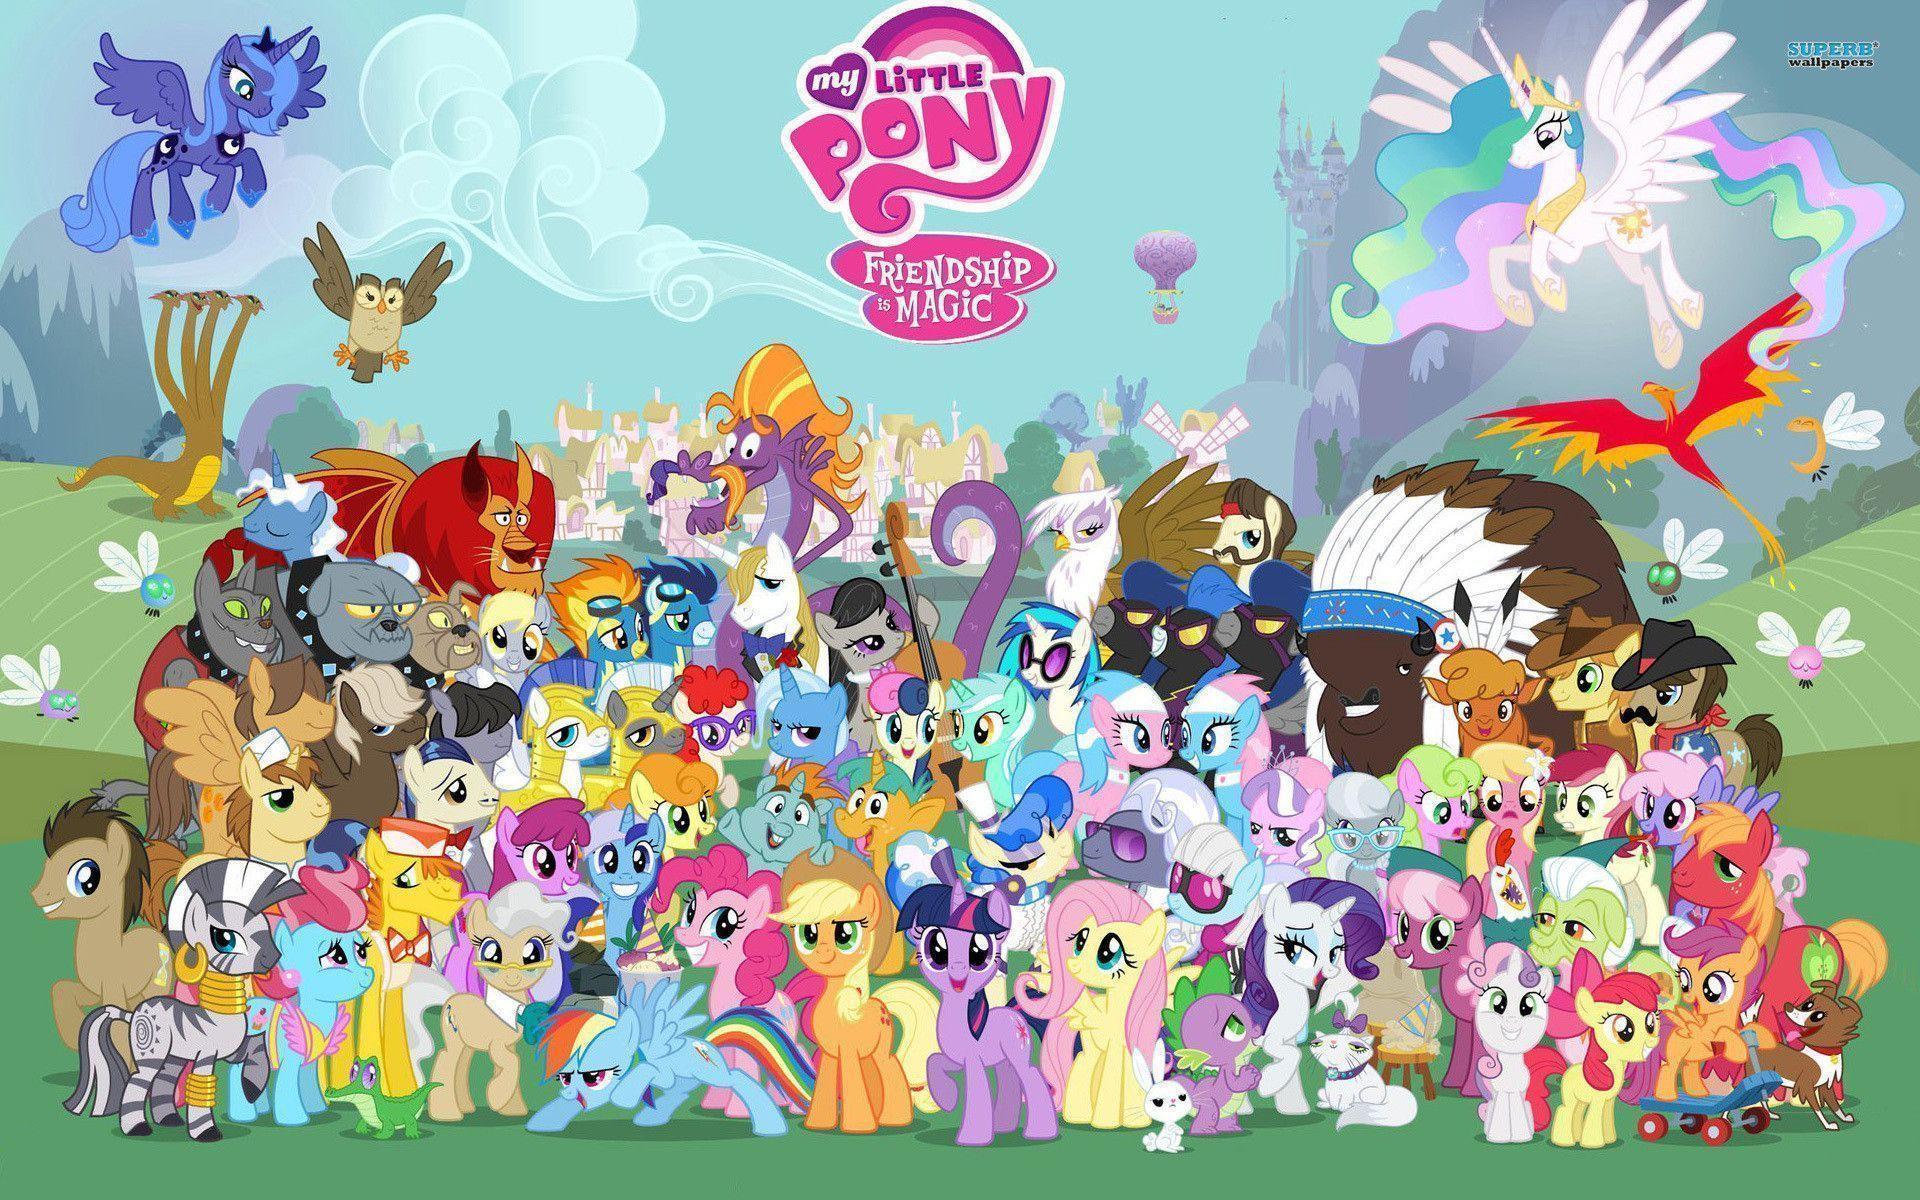 my little pony friendship is magic Little Pony Friendship is